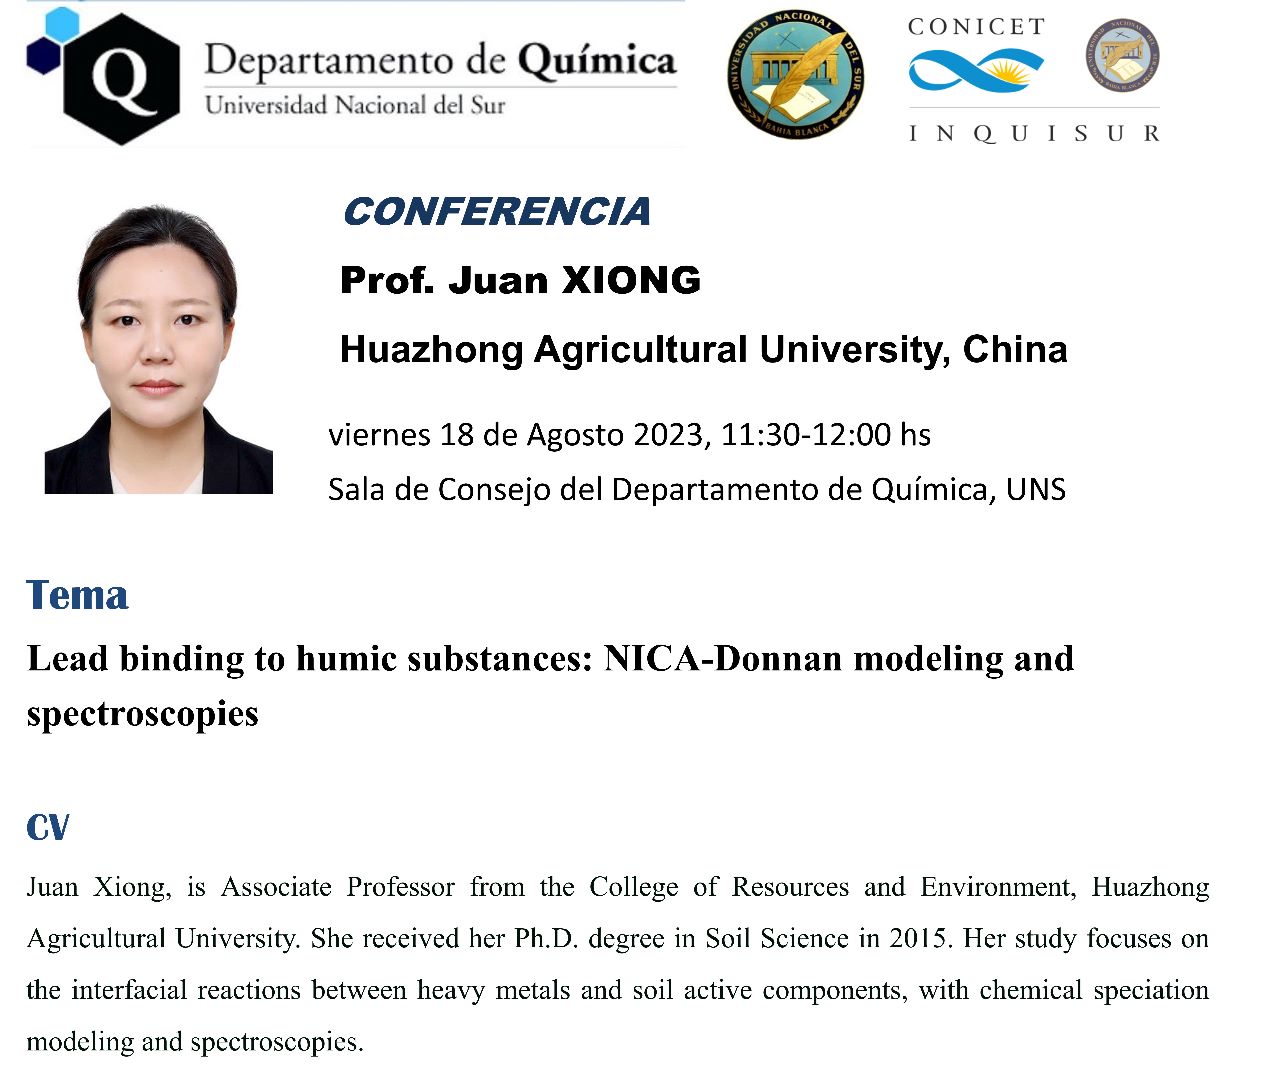 Conferencia Prof. Juan Xiong - Viernes 18 de Agosto de 11:30hs a 12:00hs